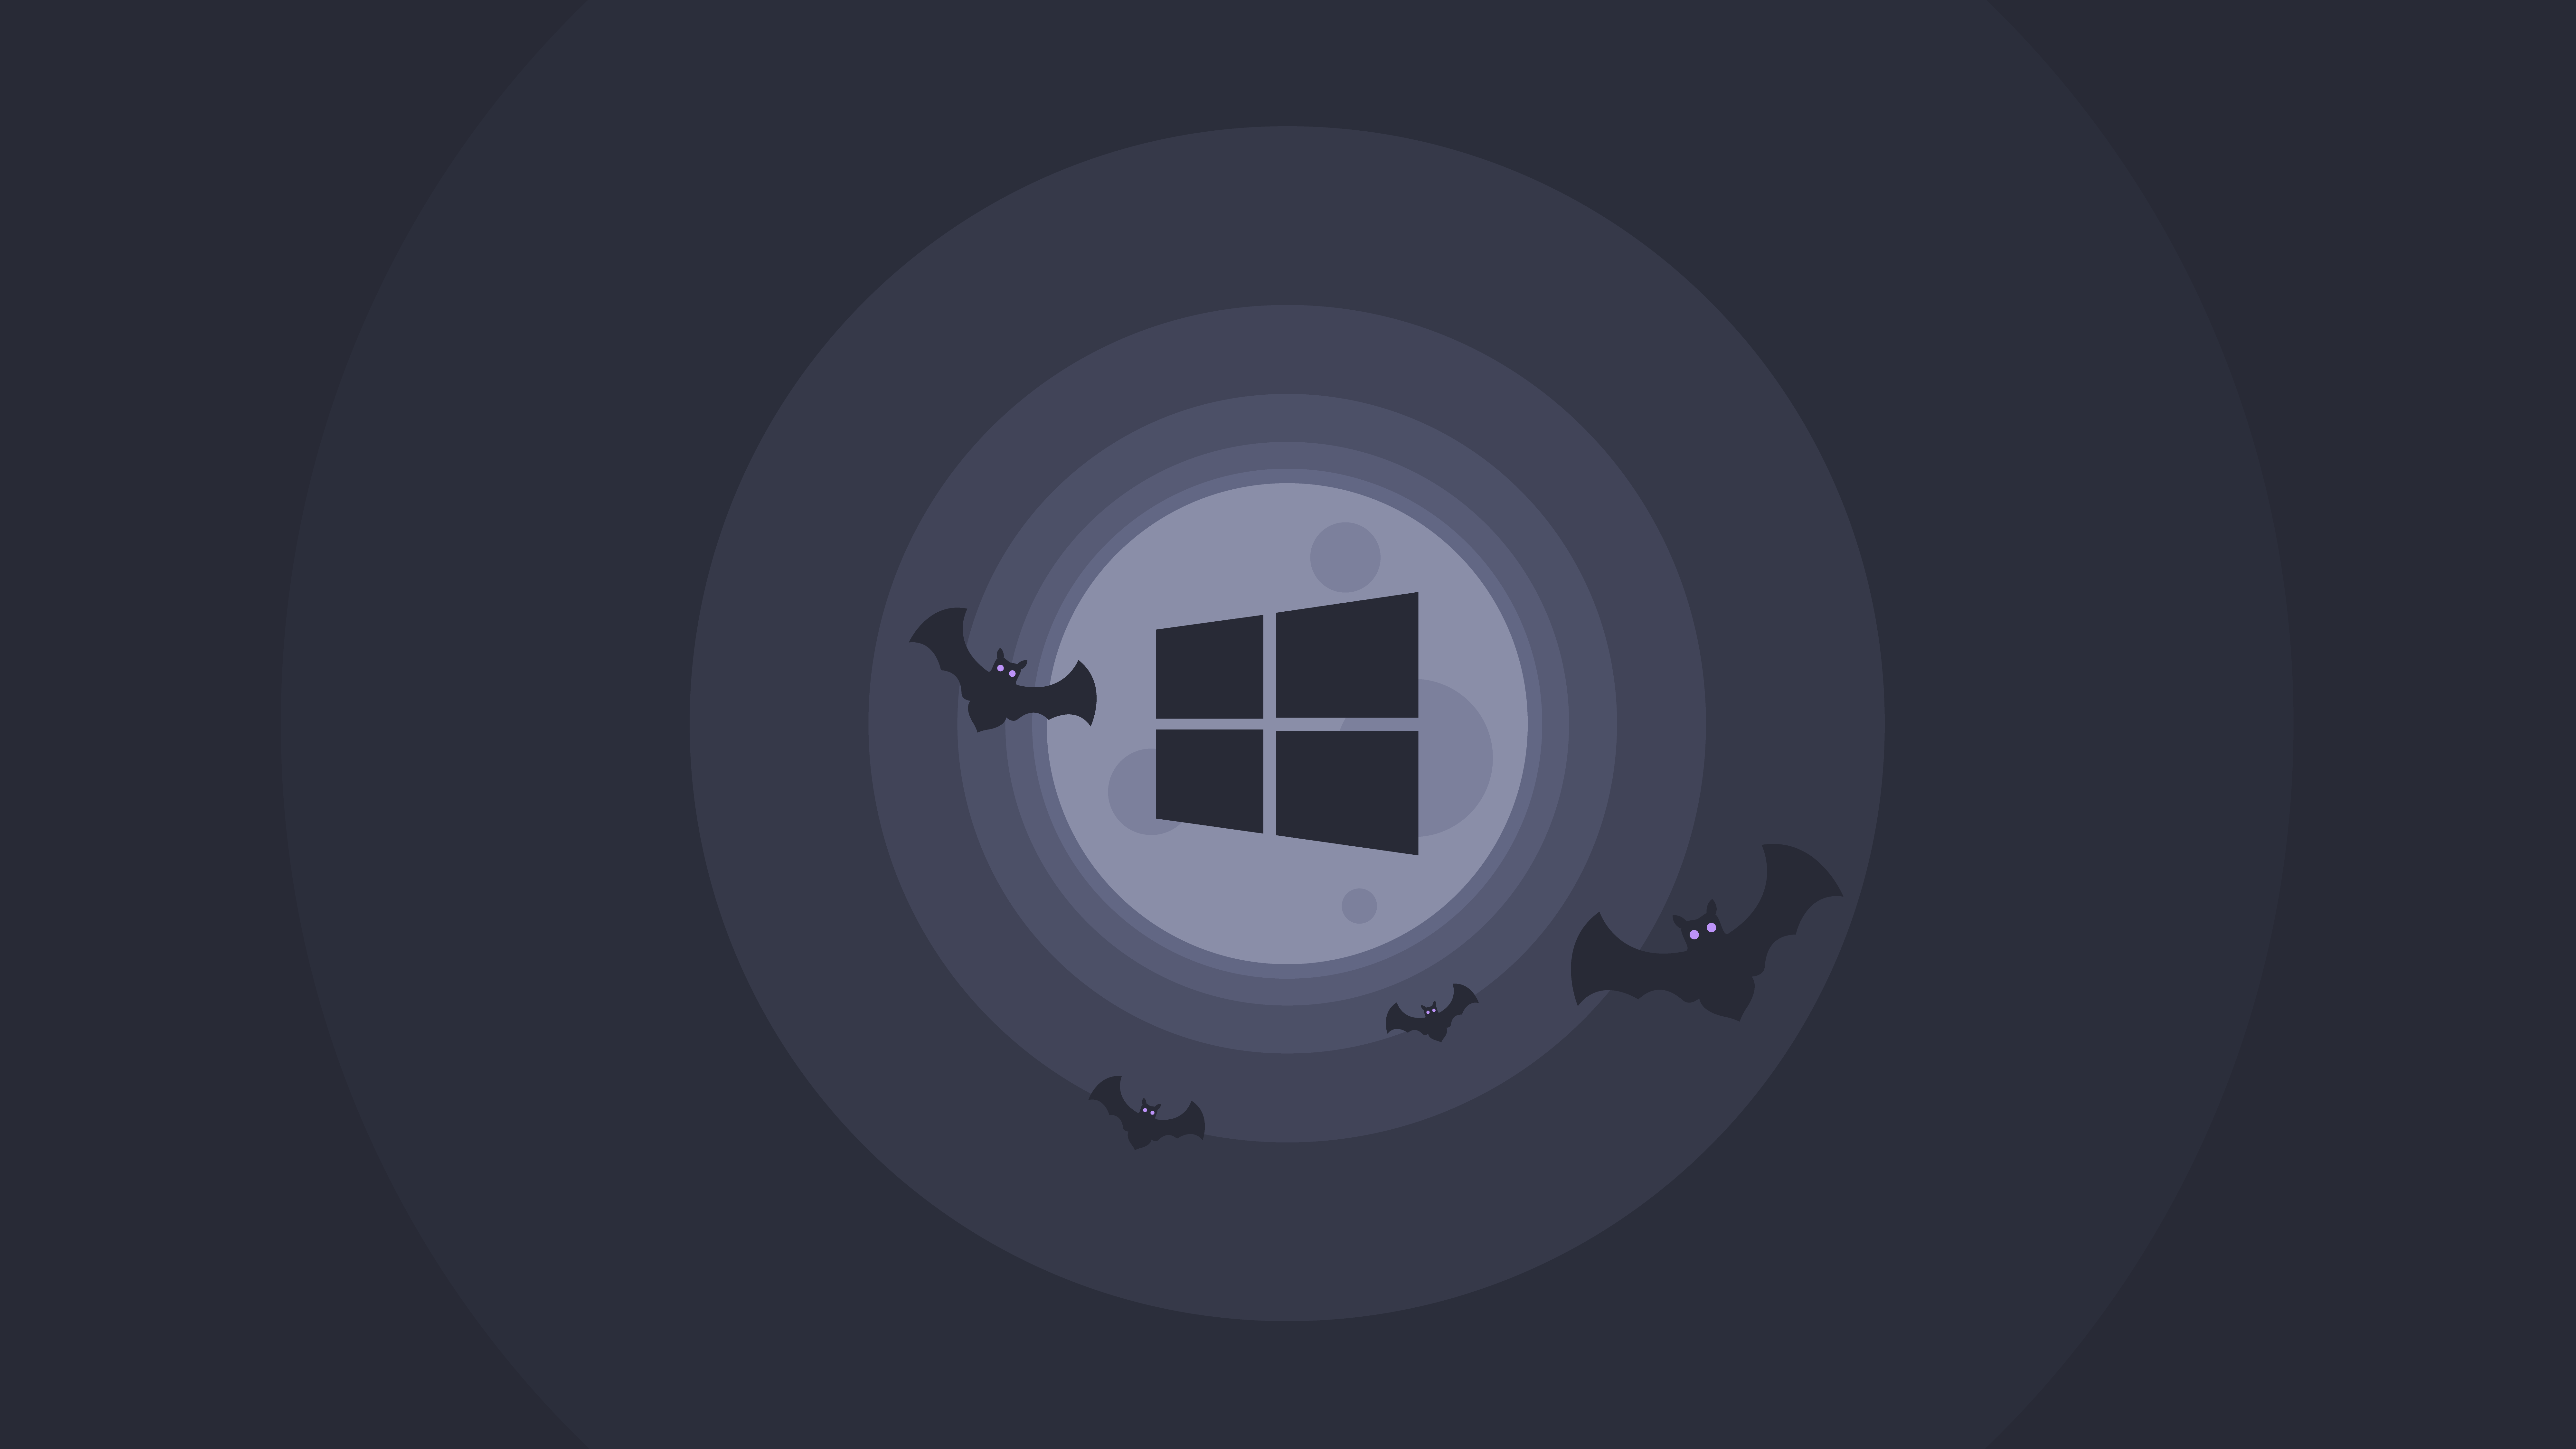 General 8001x4501 spooky bats logo simple background minimalism Dracula operating system Windows 10